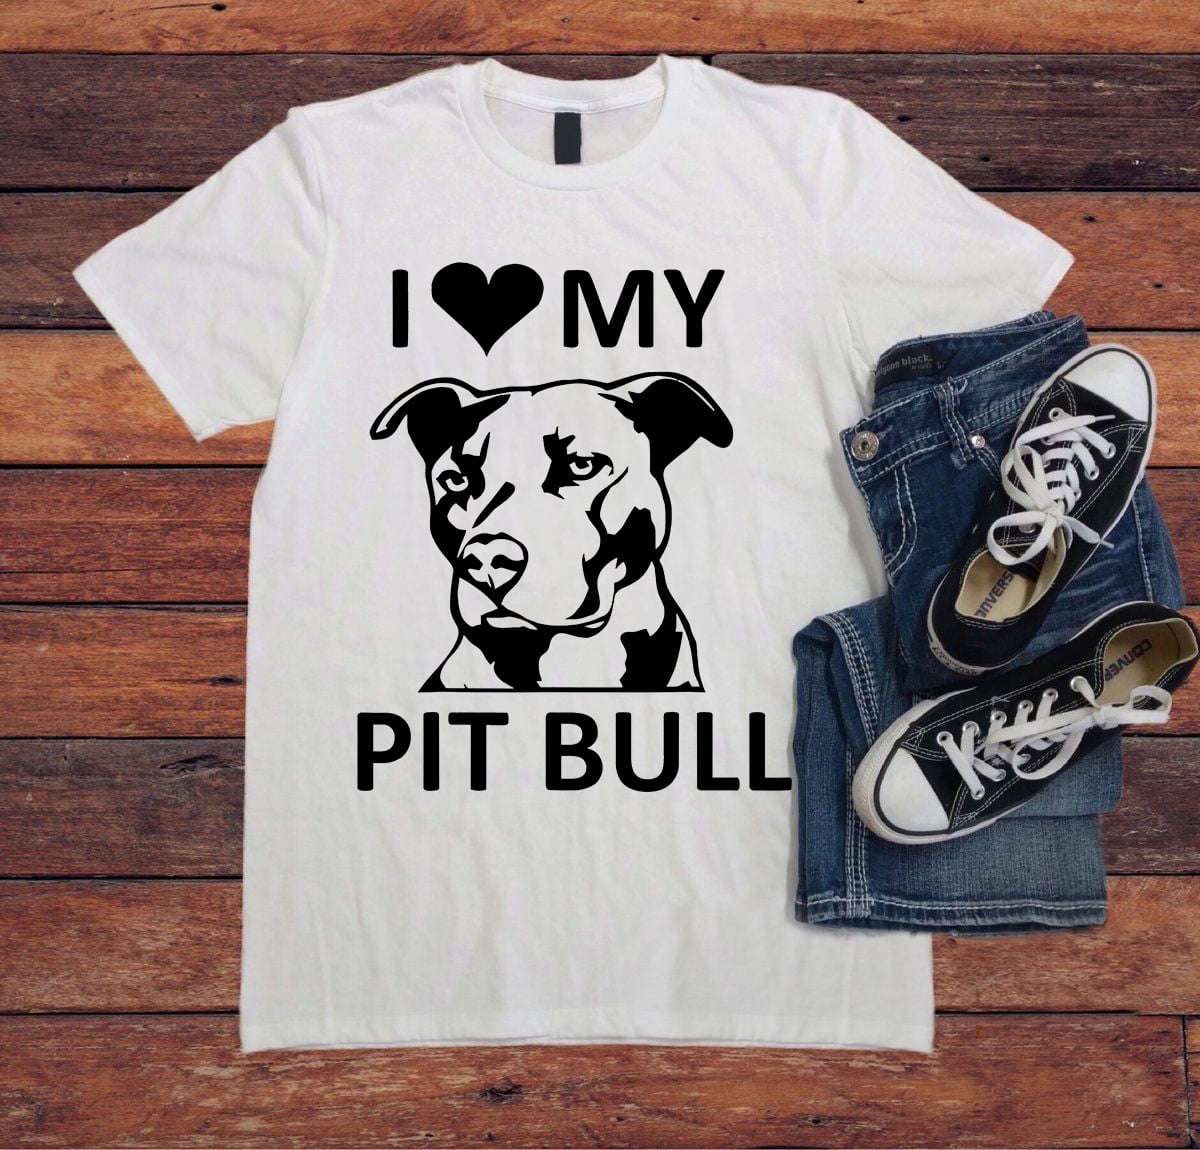 I love my pitbull - Pitbull dog lover, pitbull kind of dogs